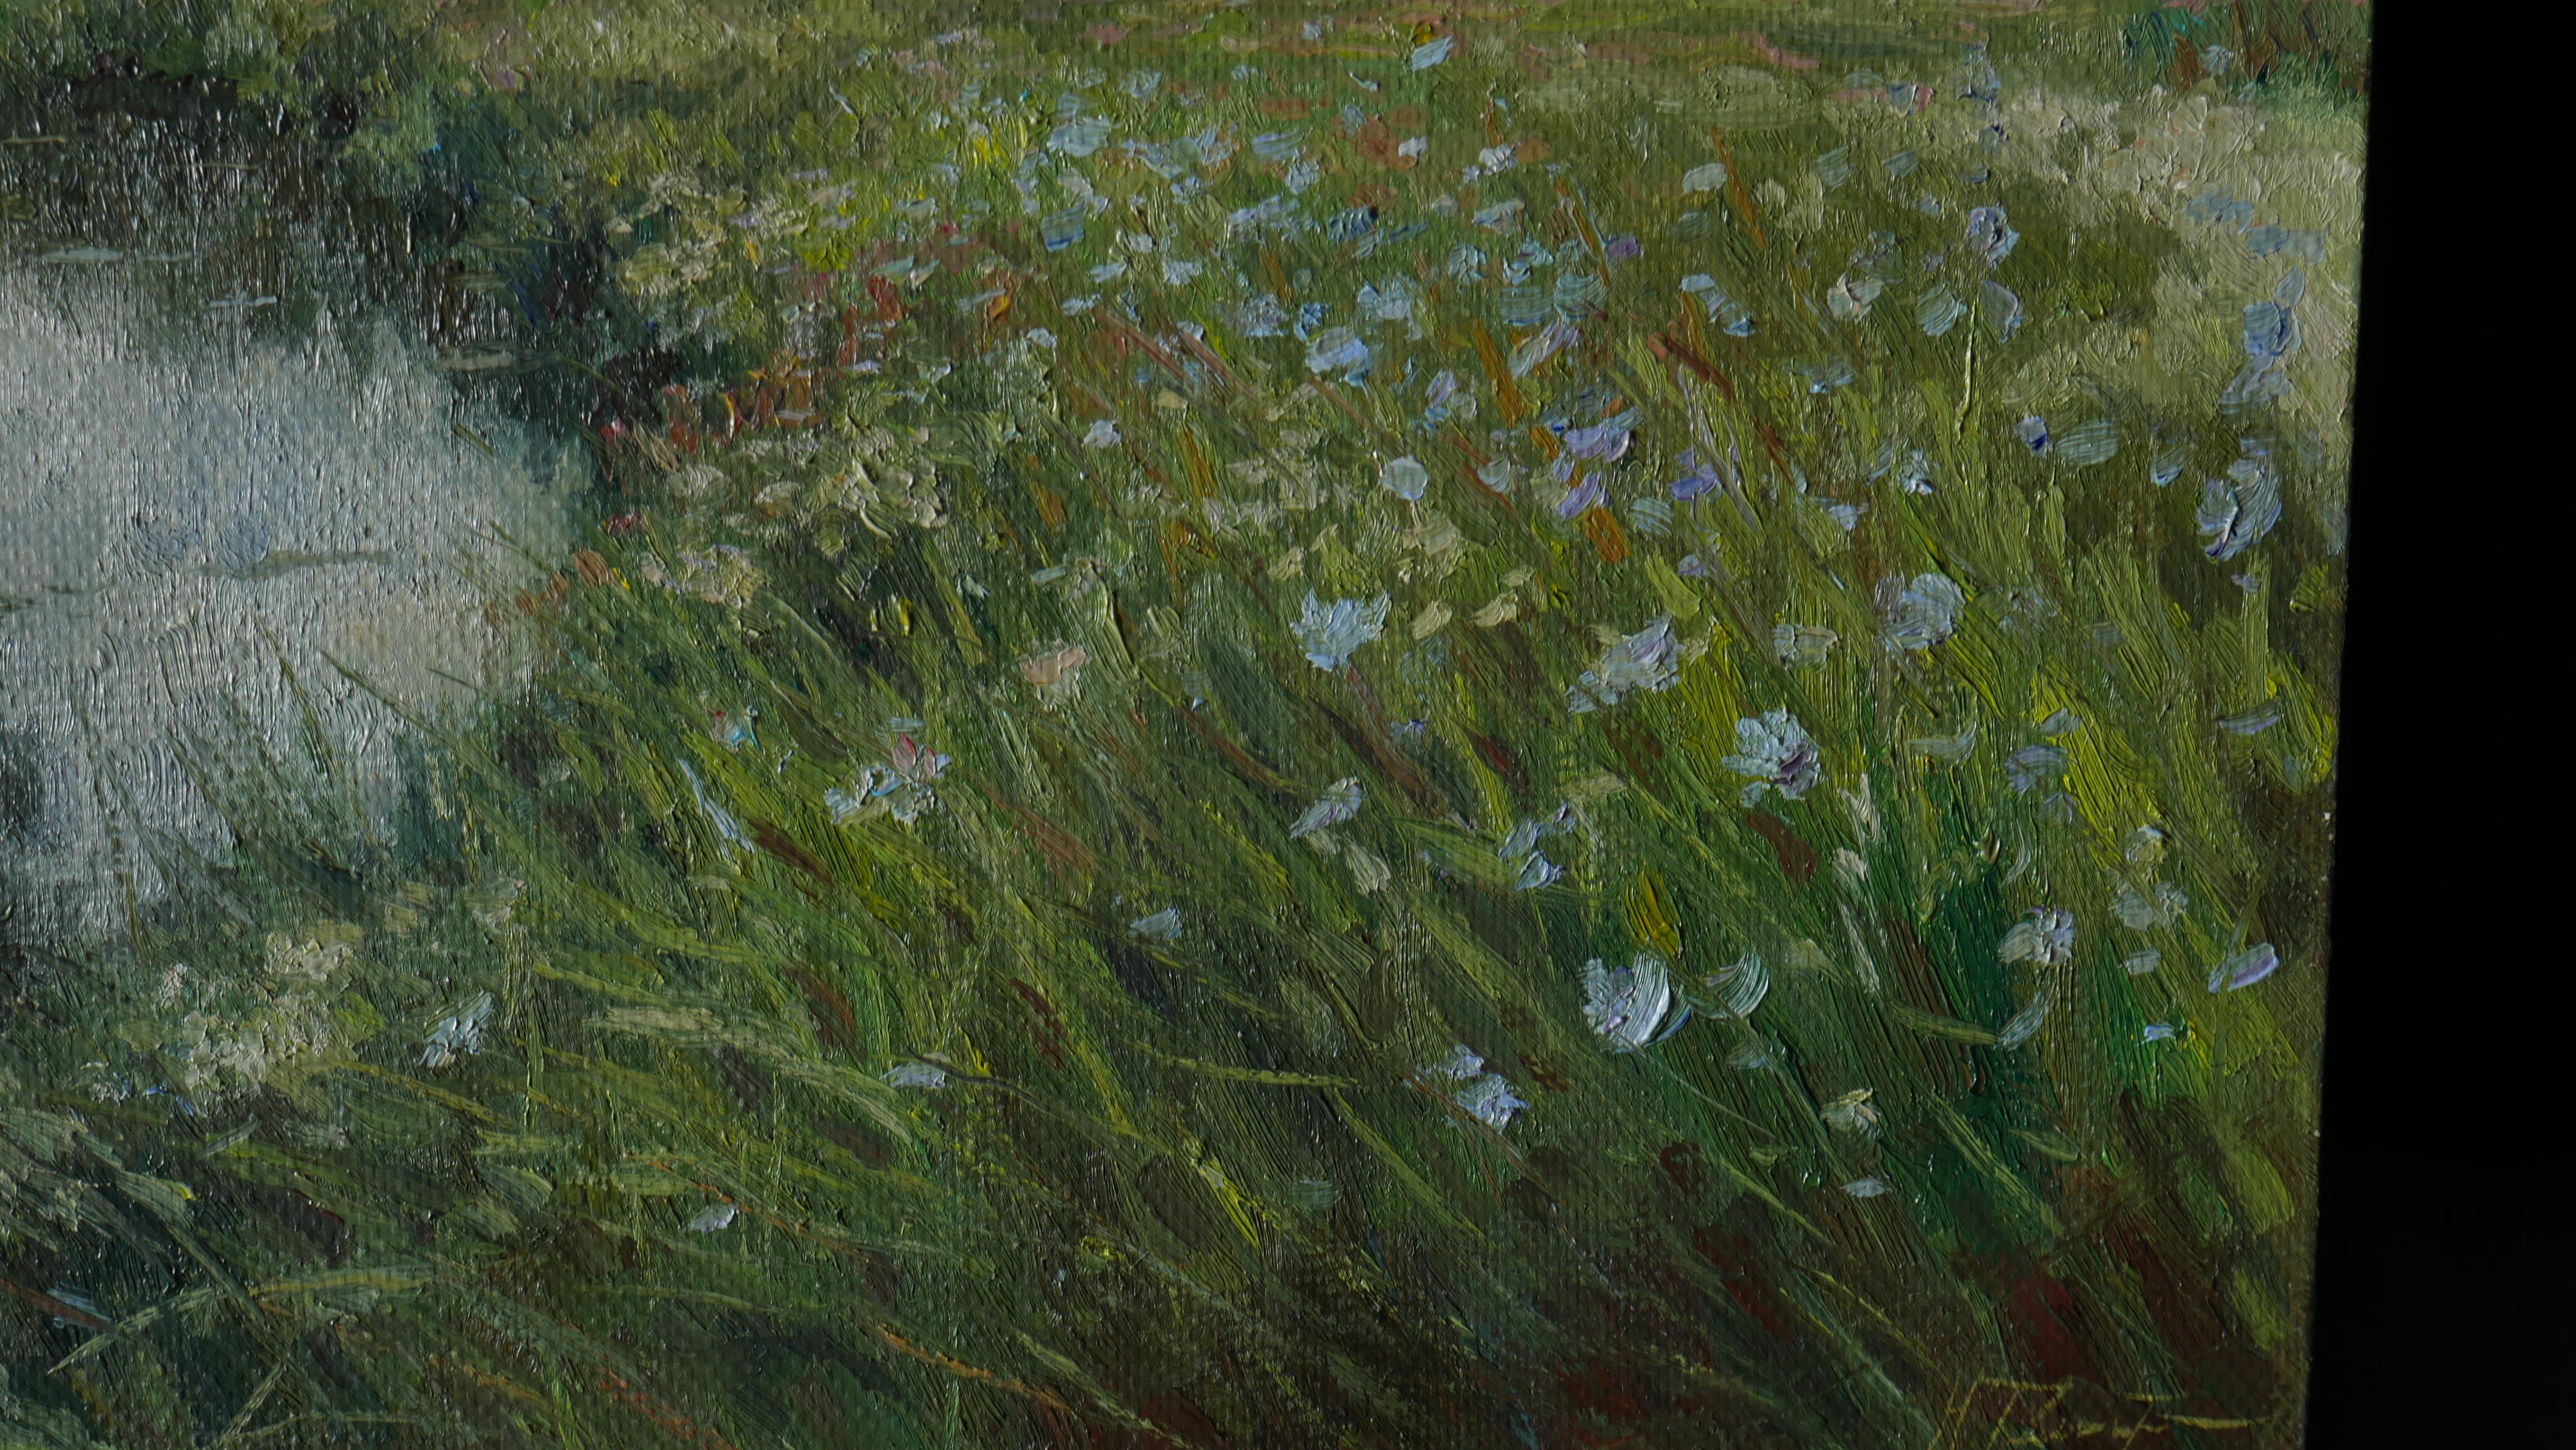 Floral Fields - summer landscape painting For Sale 5